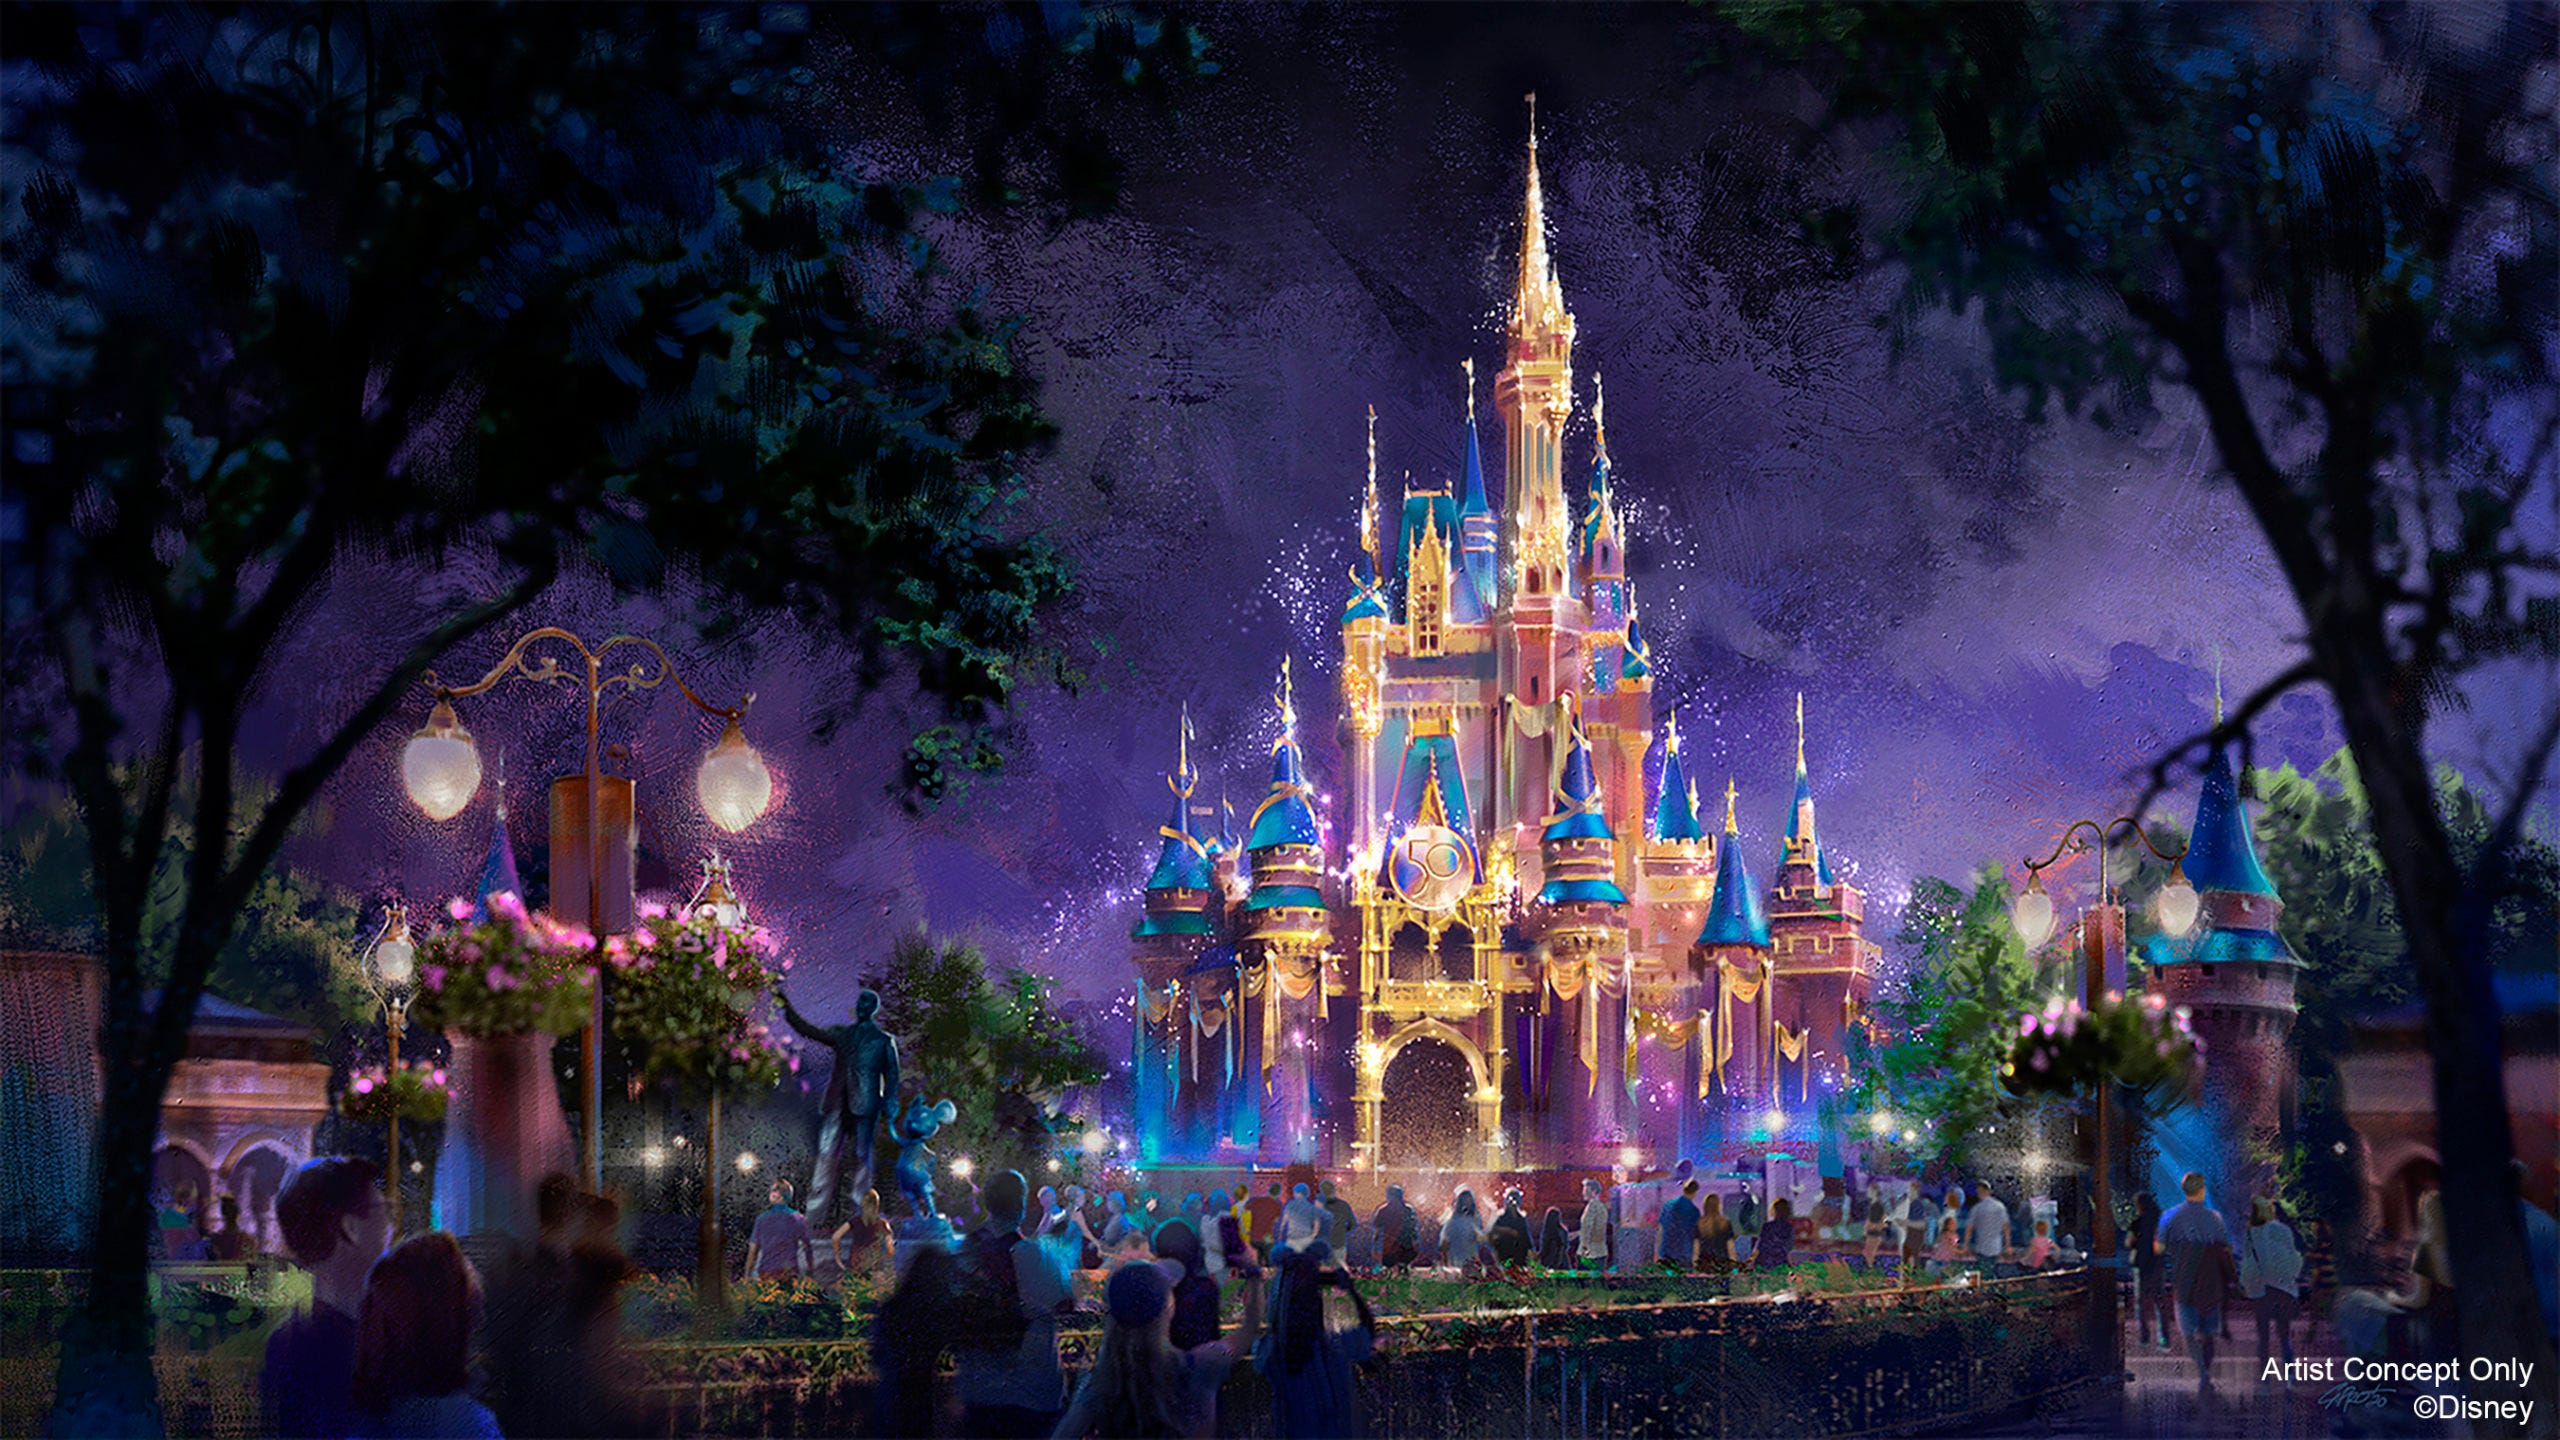 Mickey's flashy dress, glowing castle to mark Disney World 50th